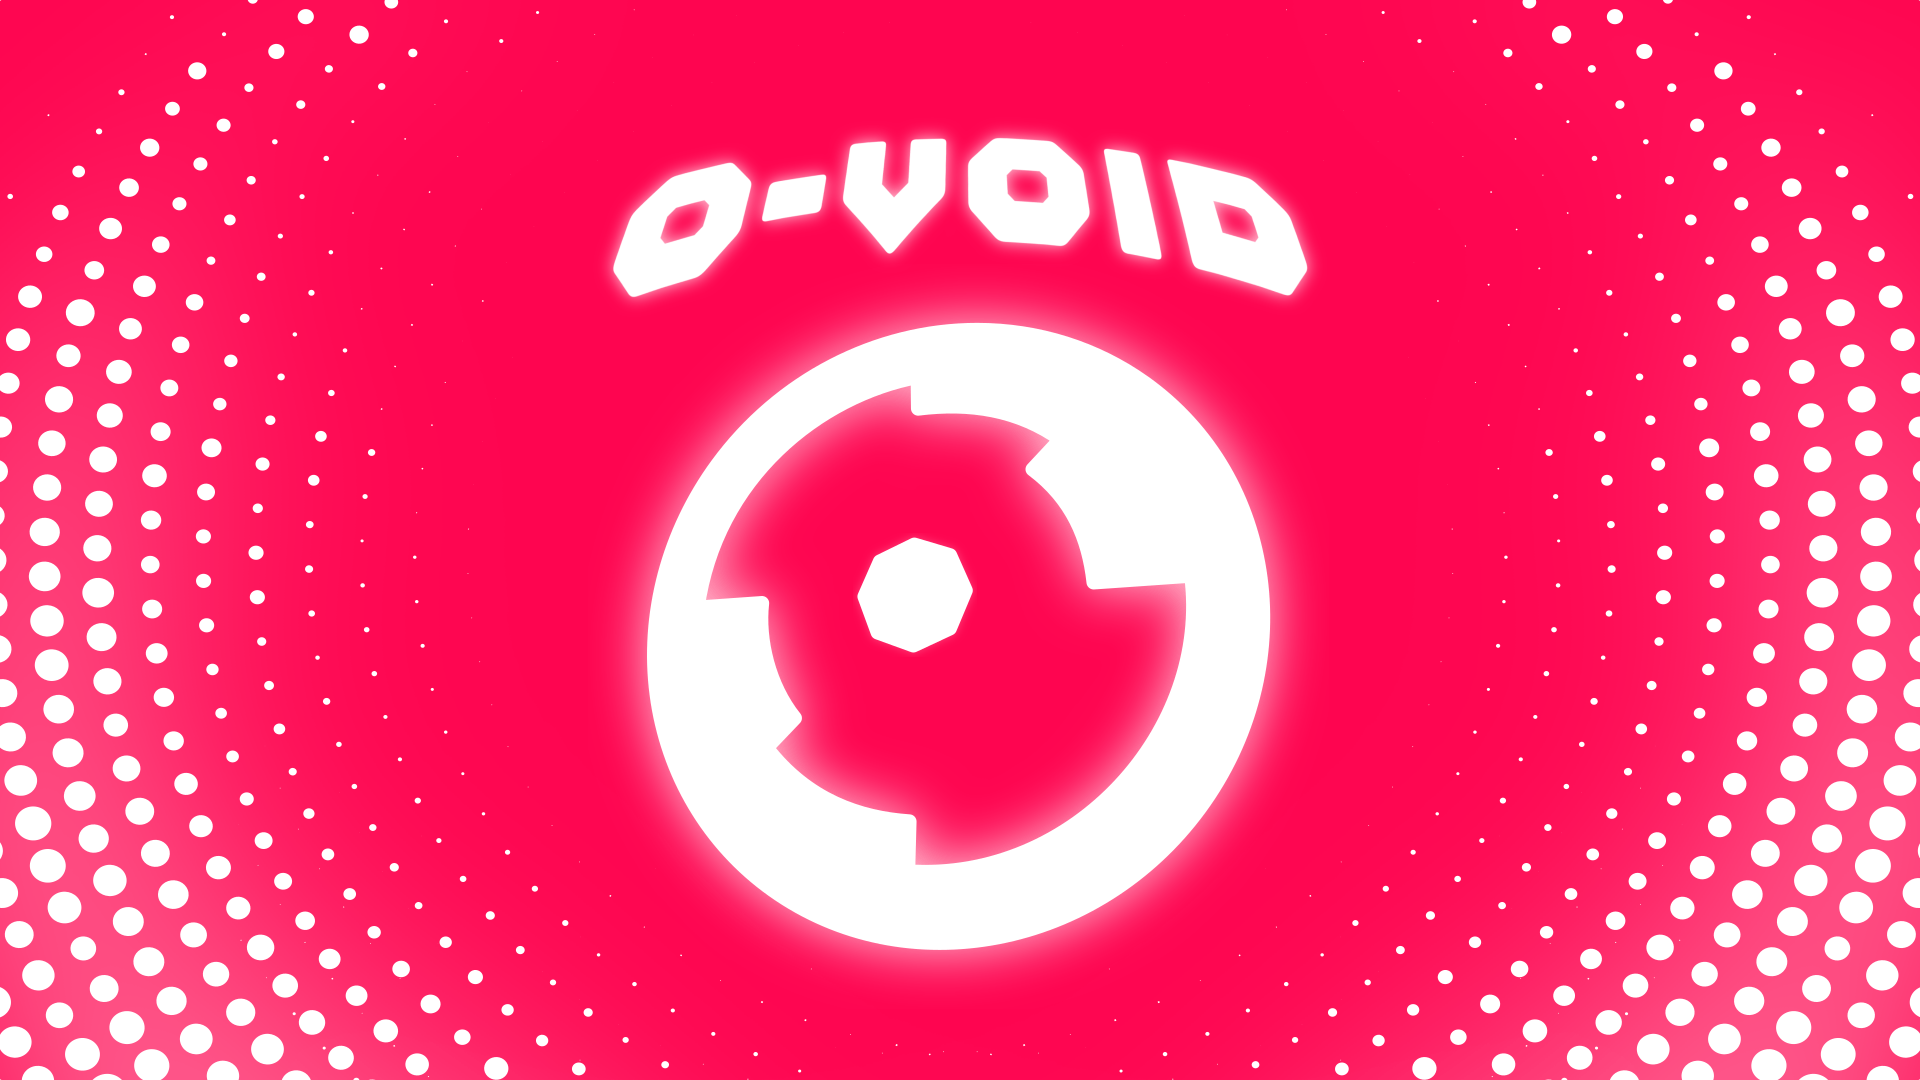 O-VOID